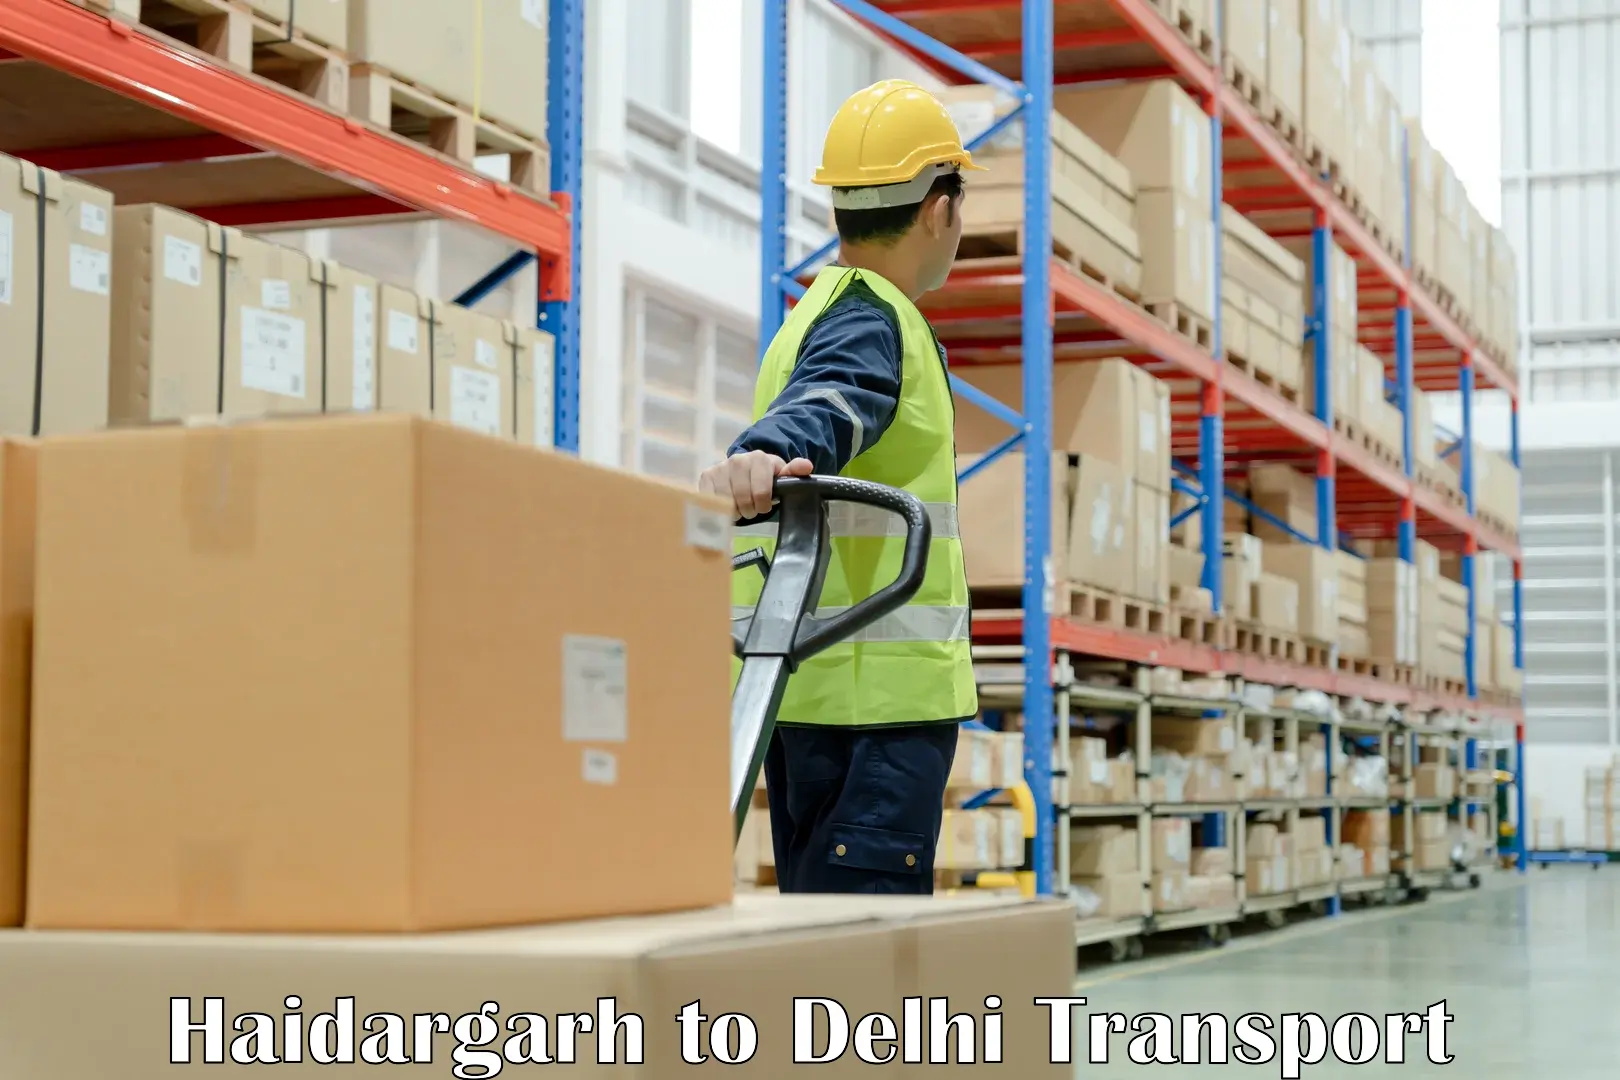 Truck transport companies in India Haidargarh to Delhi